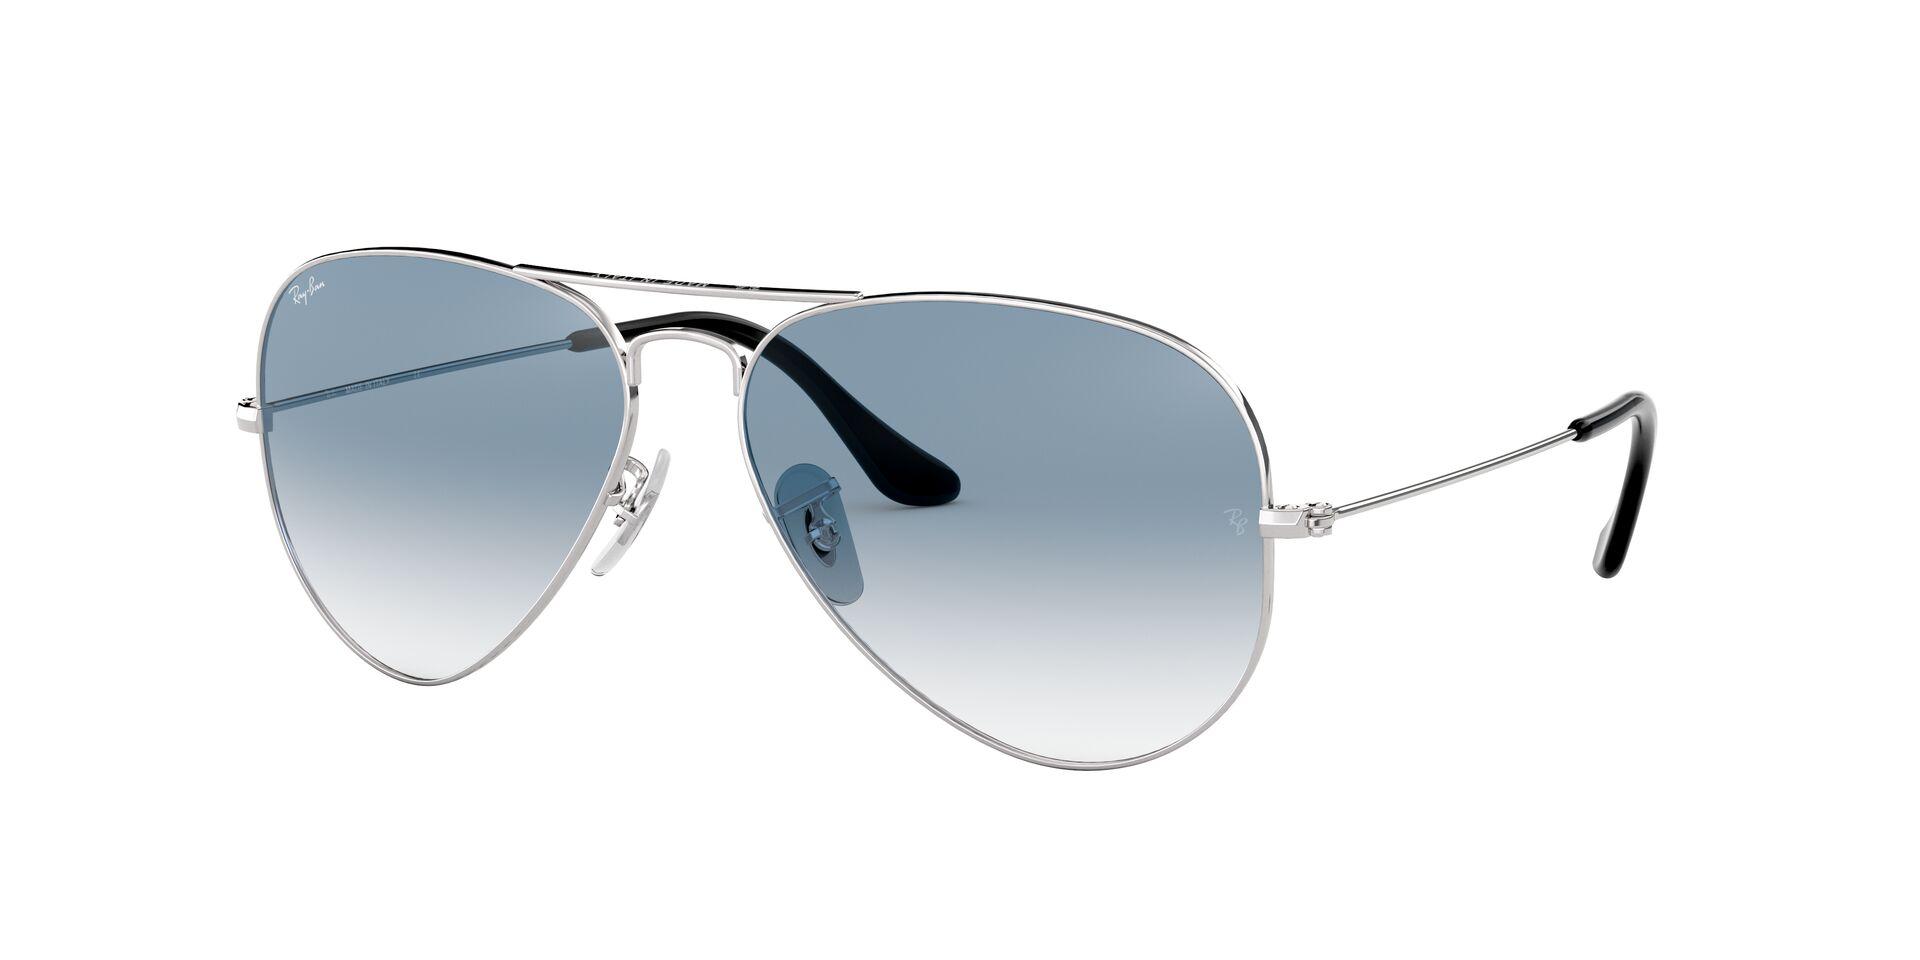 Mắt Kính RAY-BAN AVIATOR LARGE METAL - RB3025 003/3F -Sunglasses